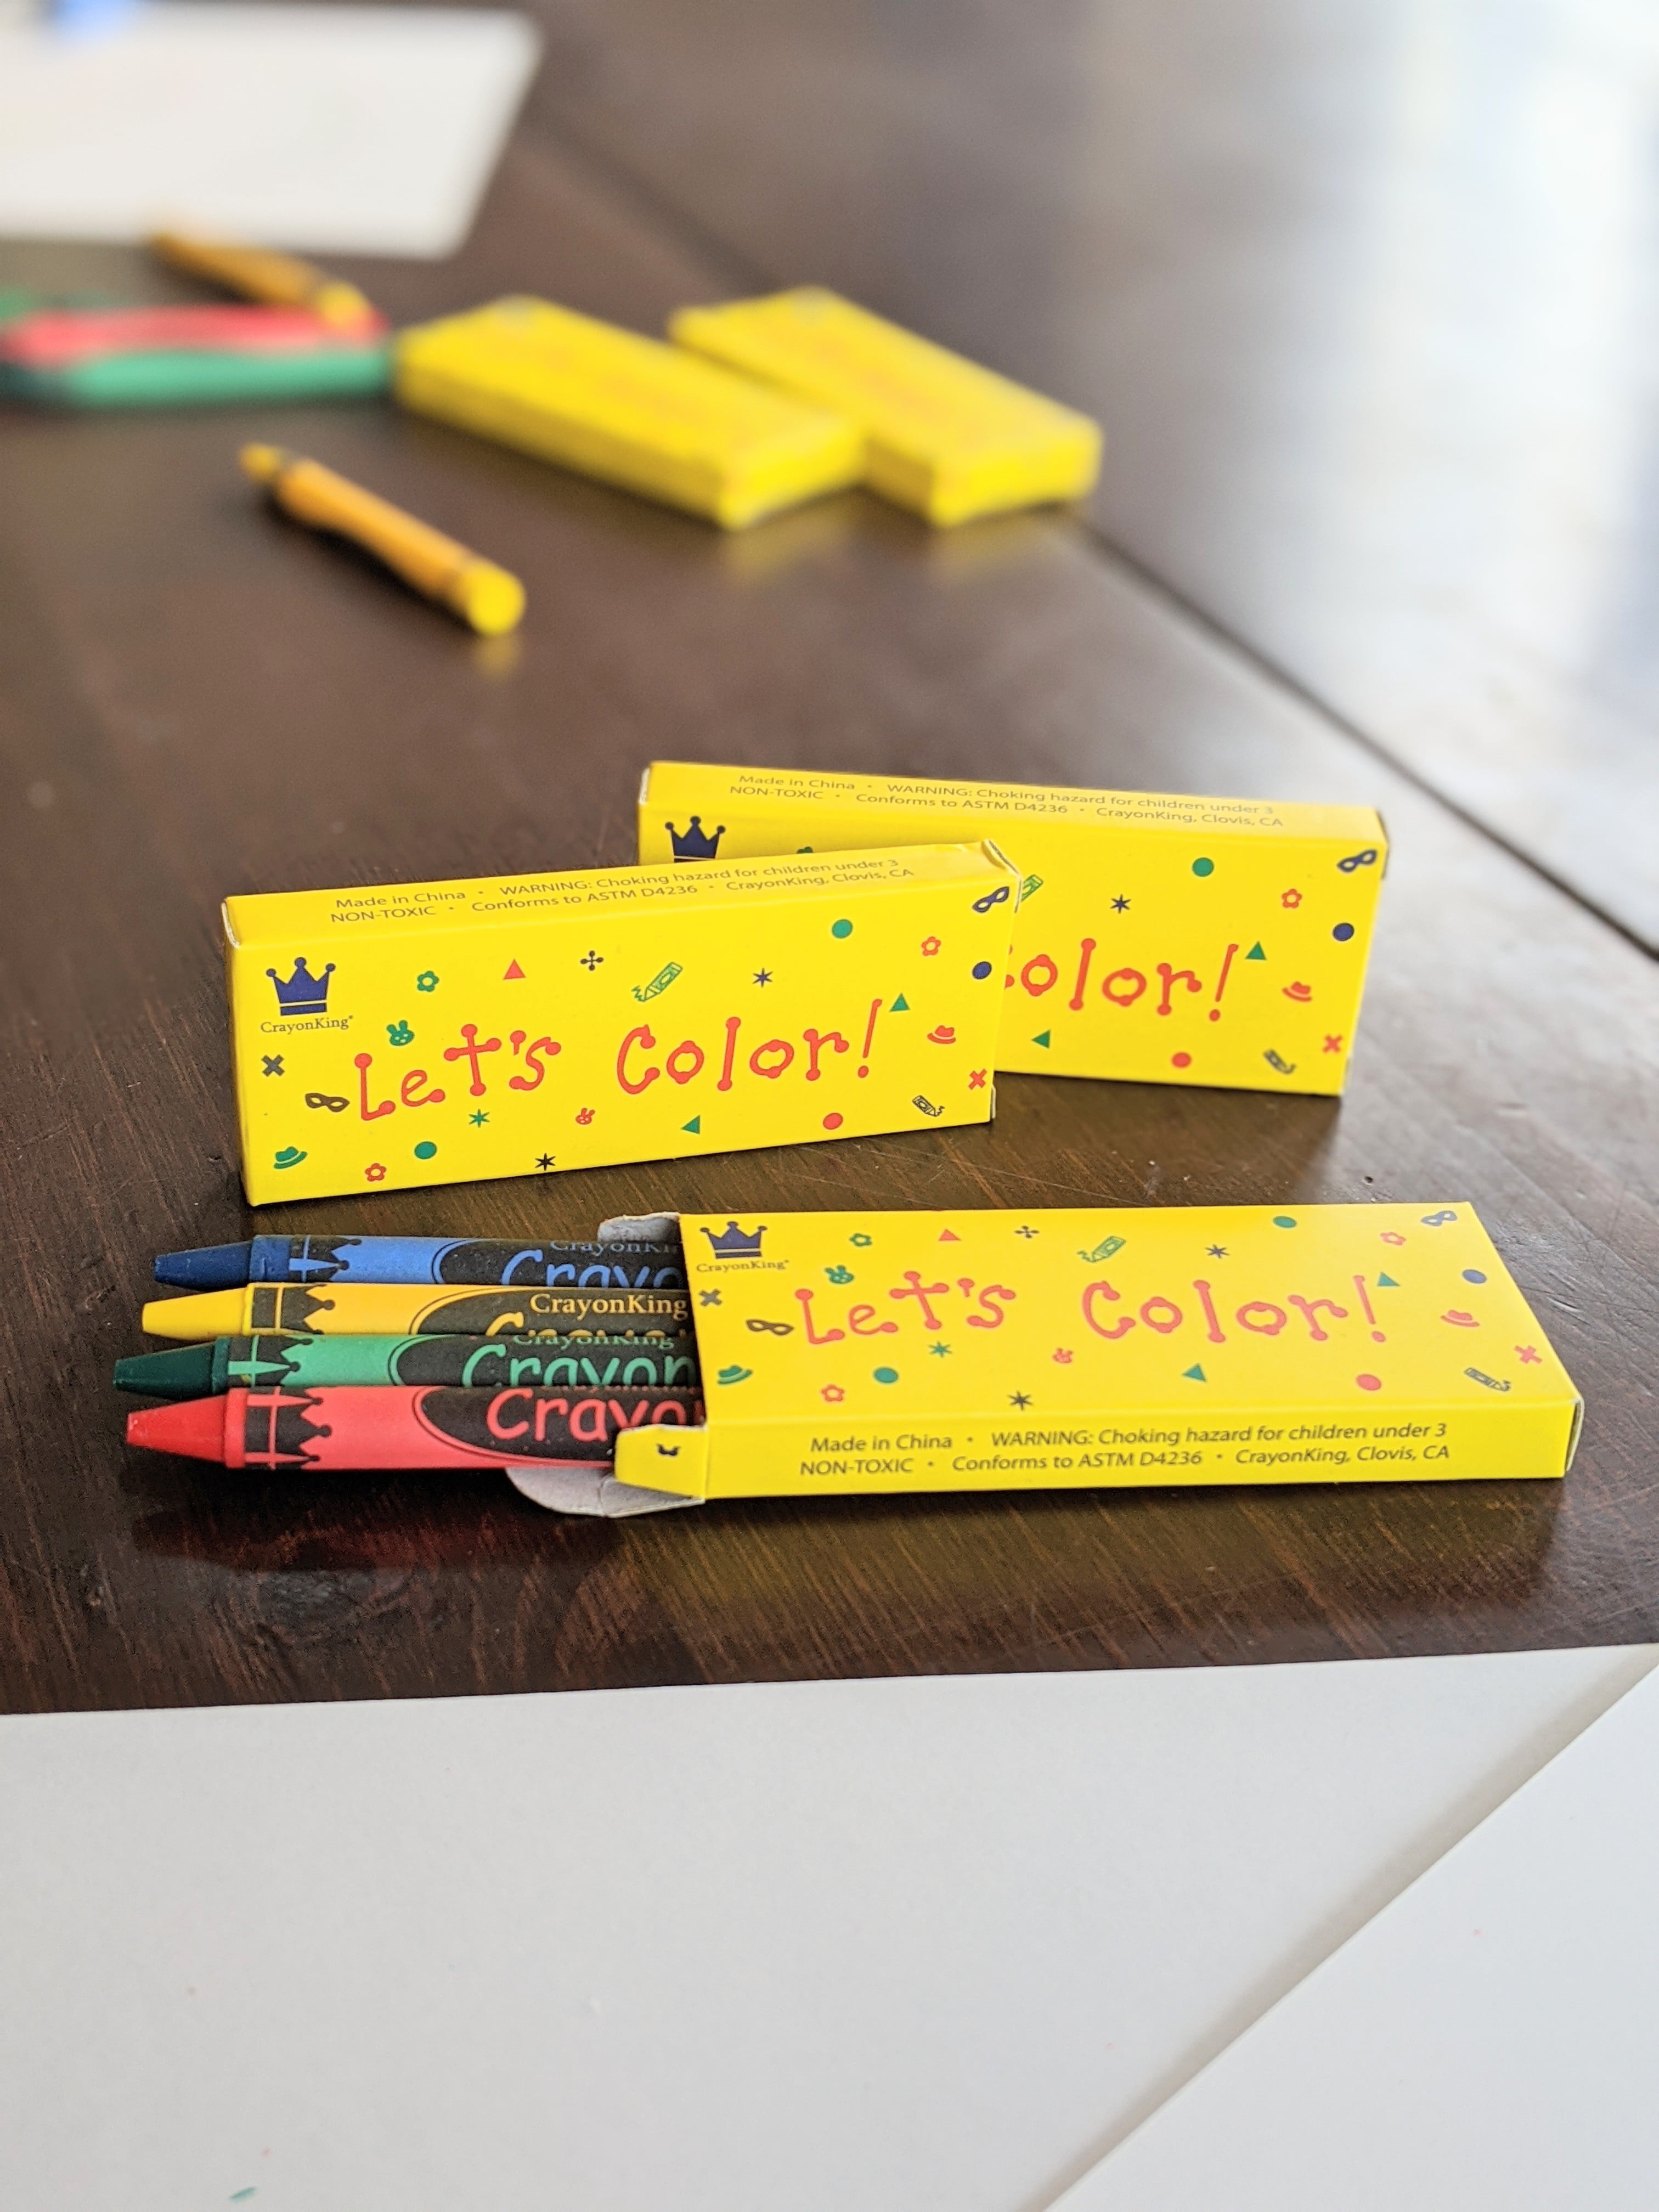 Crayola Classpack Regular Crayons, 16 Colors, 800/Box – King Stationary Inc